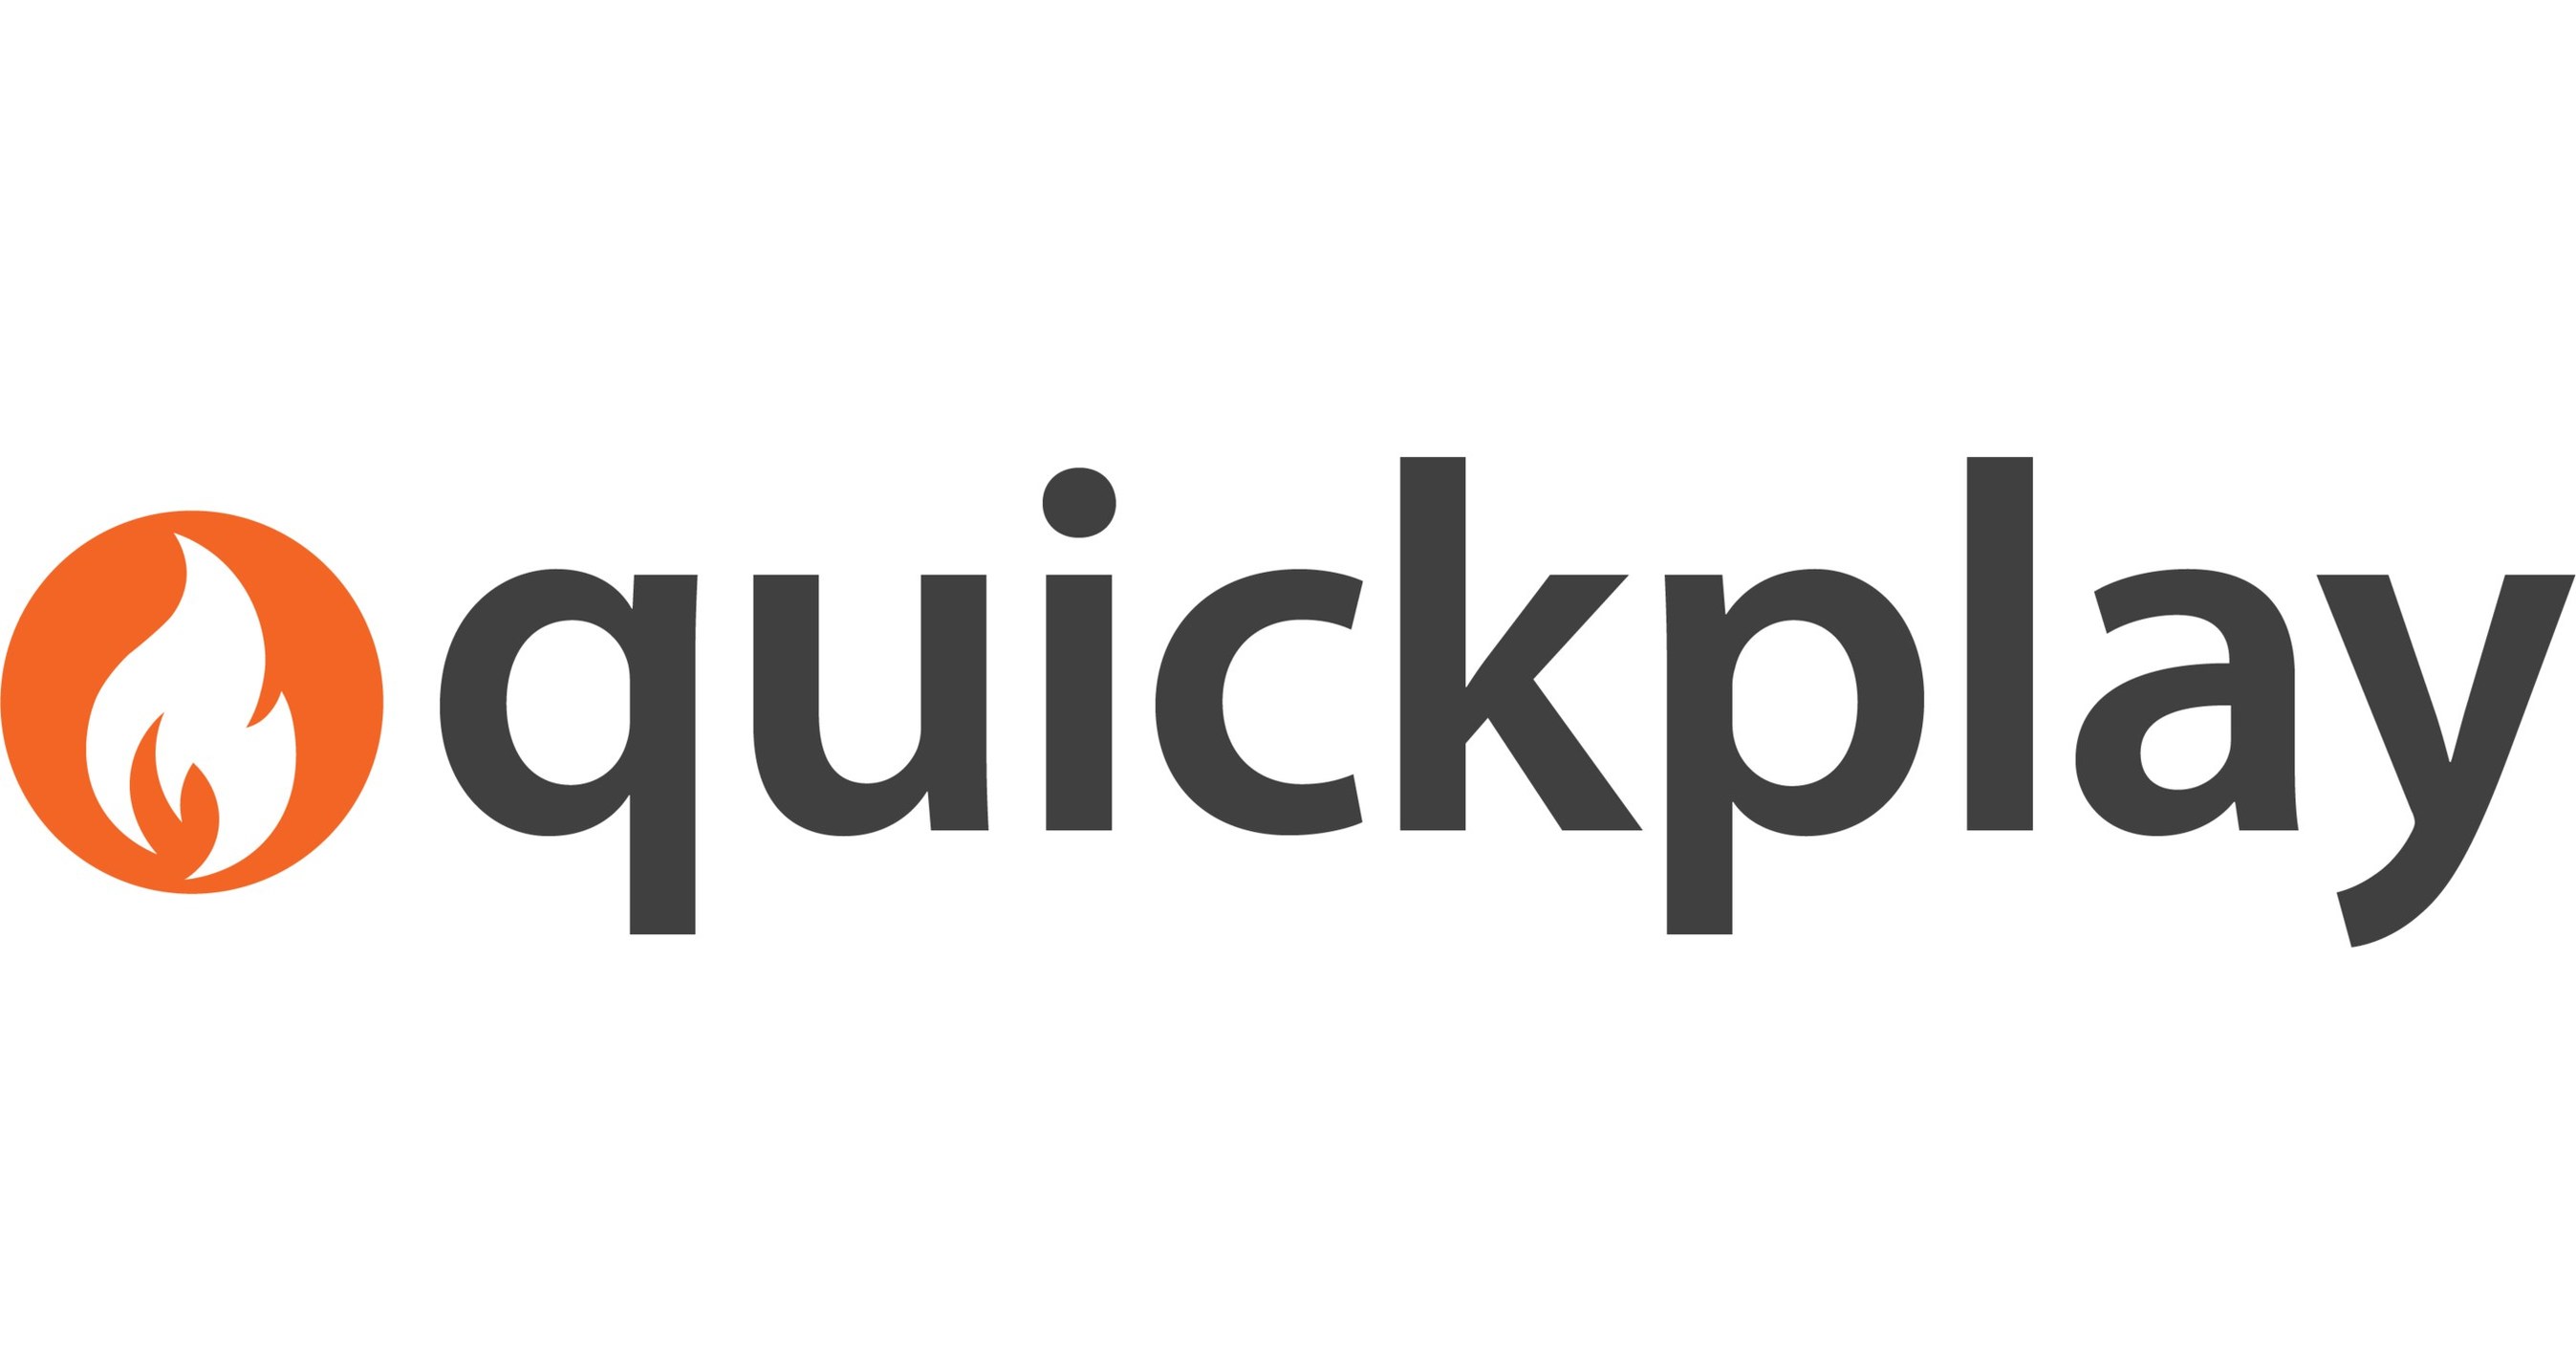 Logo Quickplay